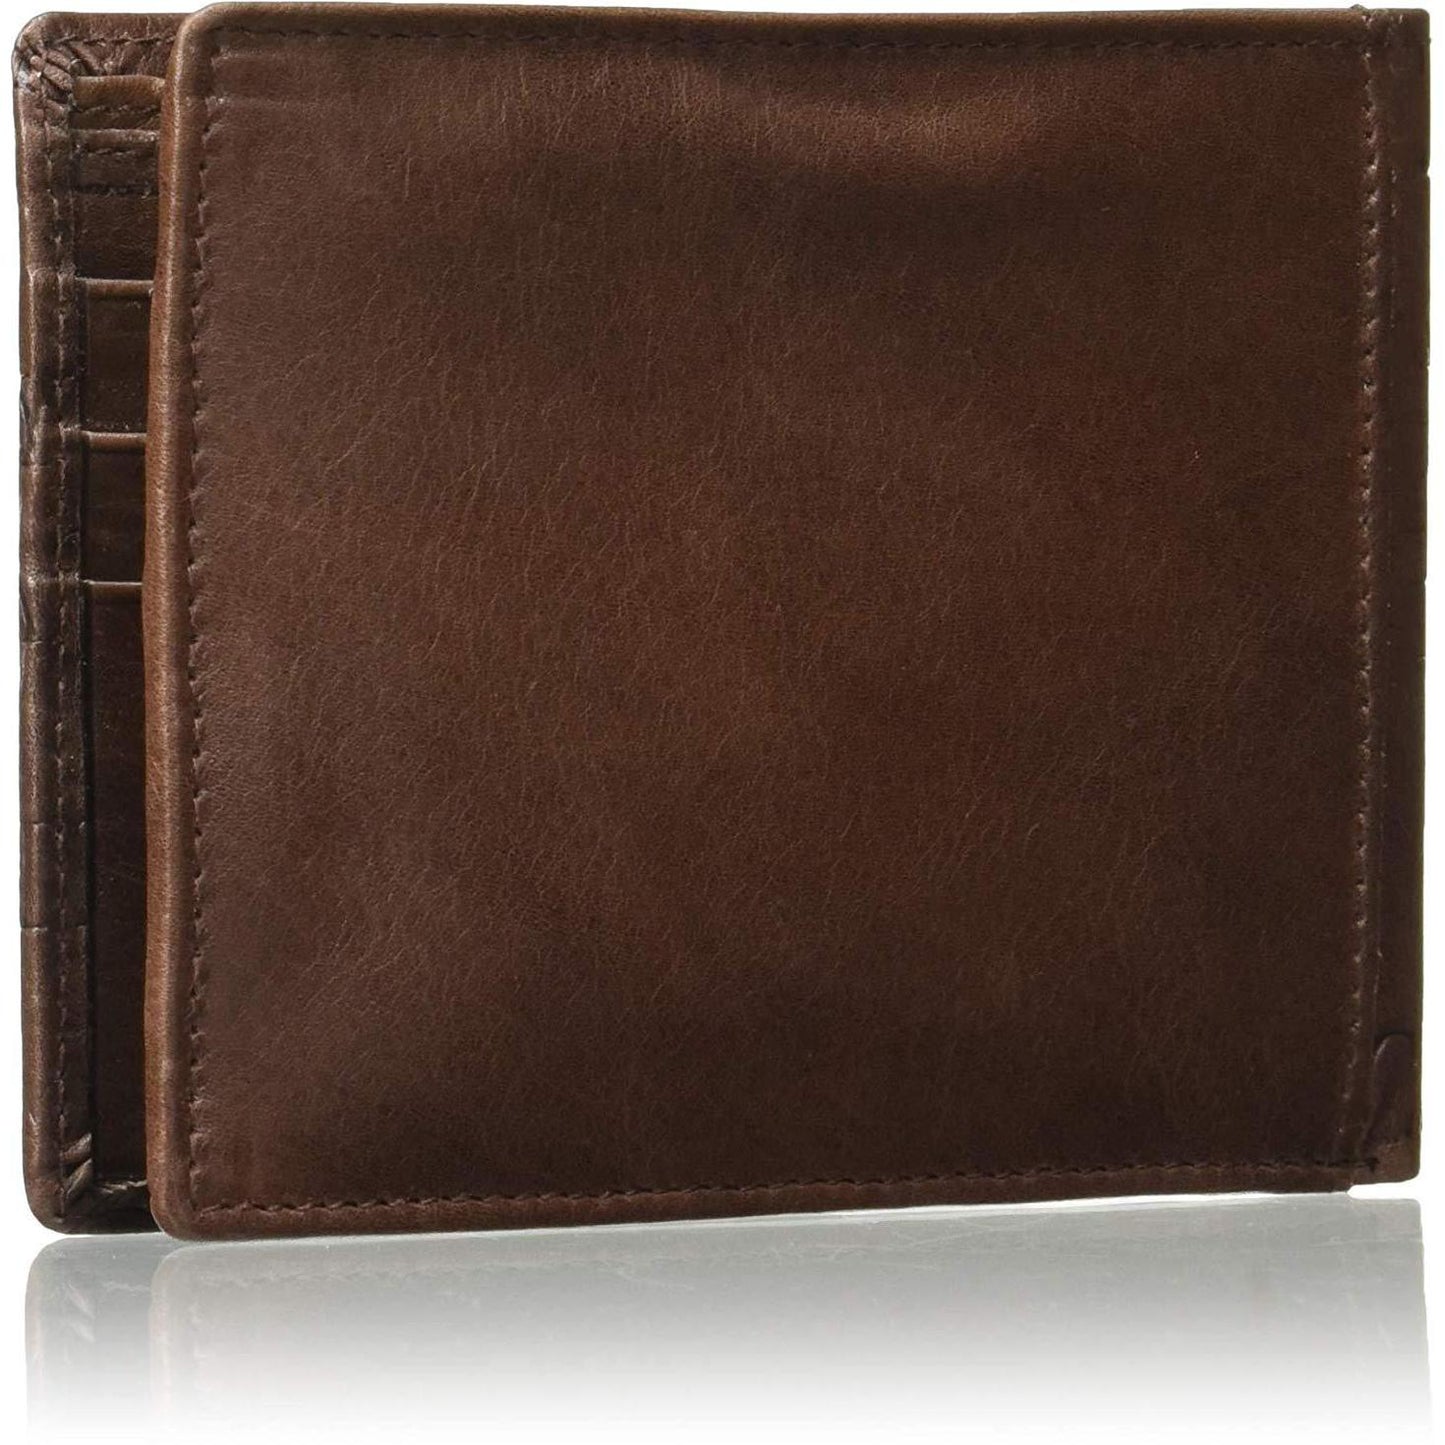 Brown Colour Bi-Fold Italian Leather Slim Wallet ( 6 Card Slot + 2 Hidden Compartment + Cash Compartment)